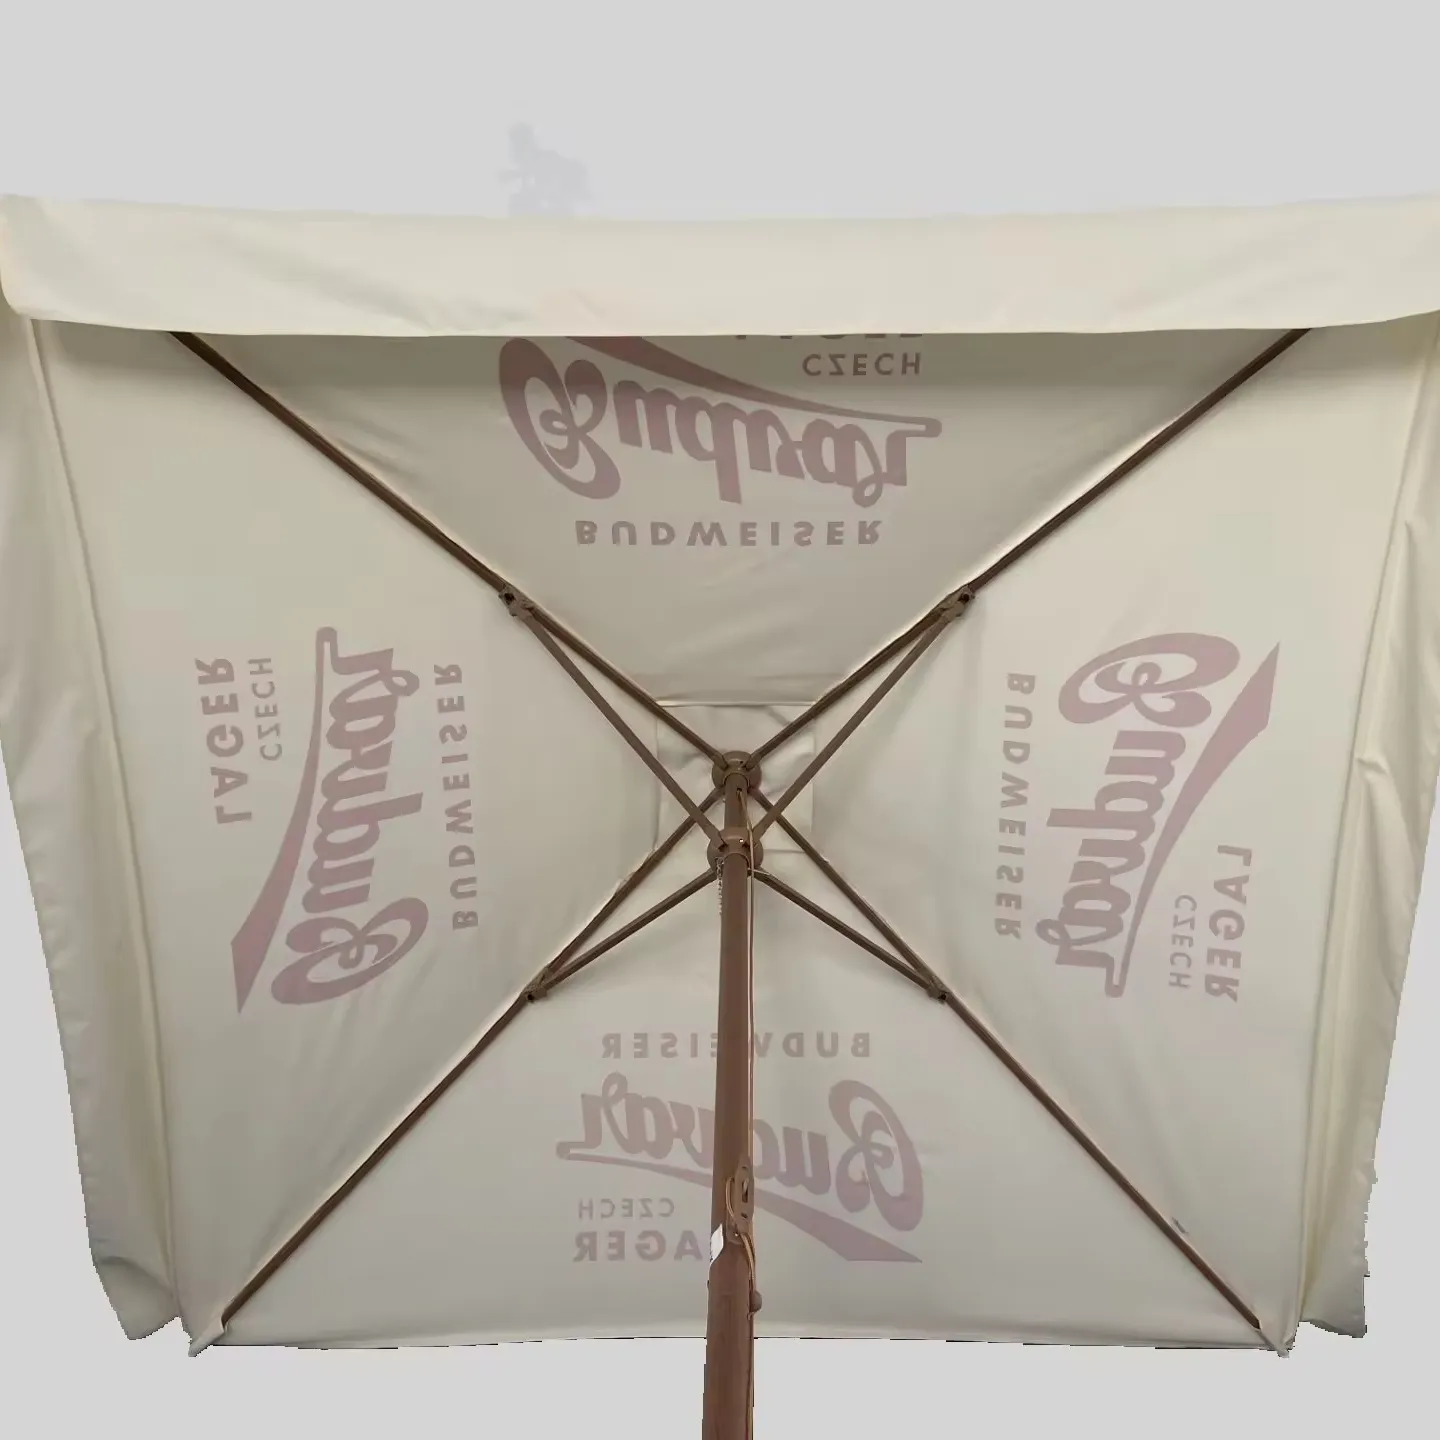 High quality wooden garden furniture umbrella for outdoor activities